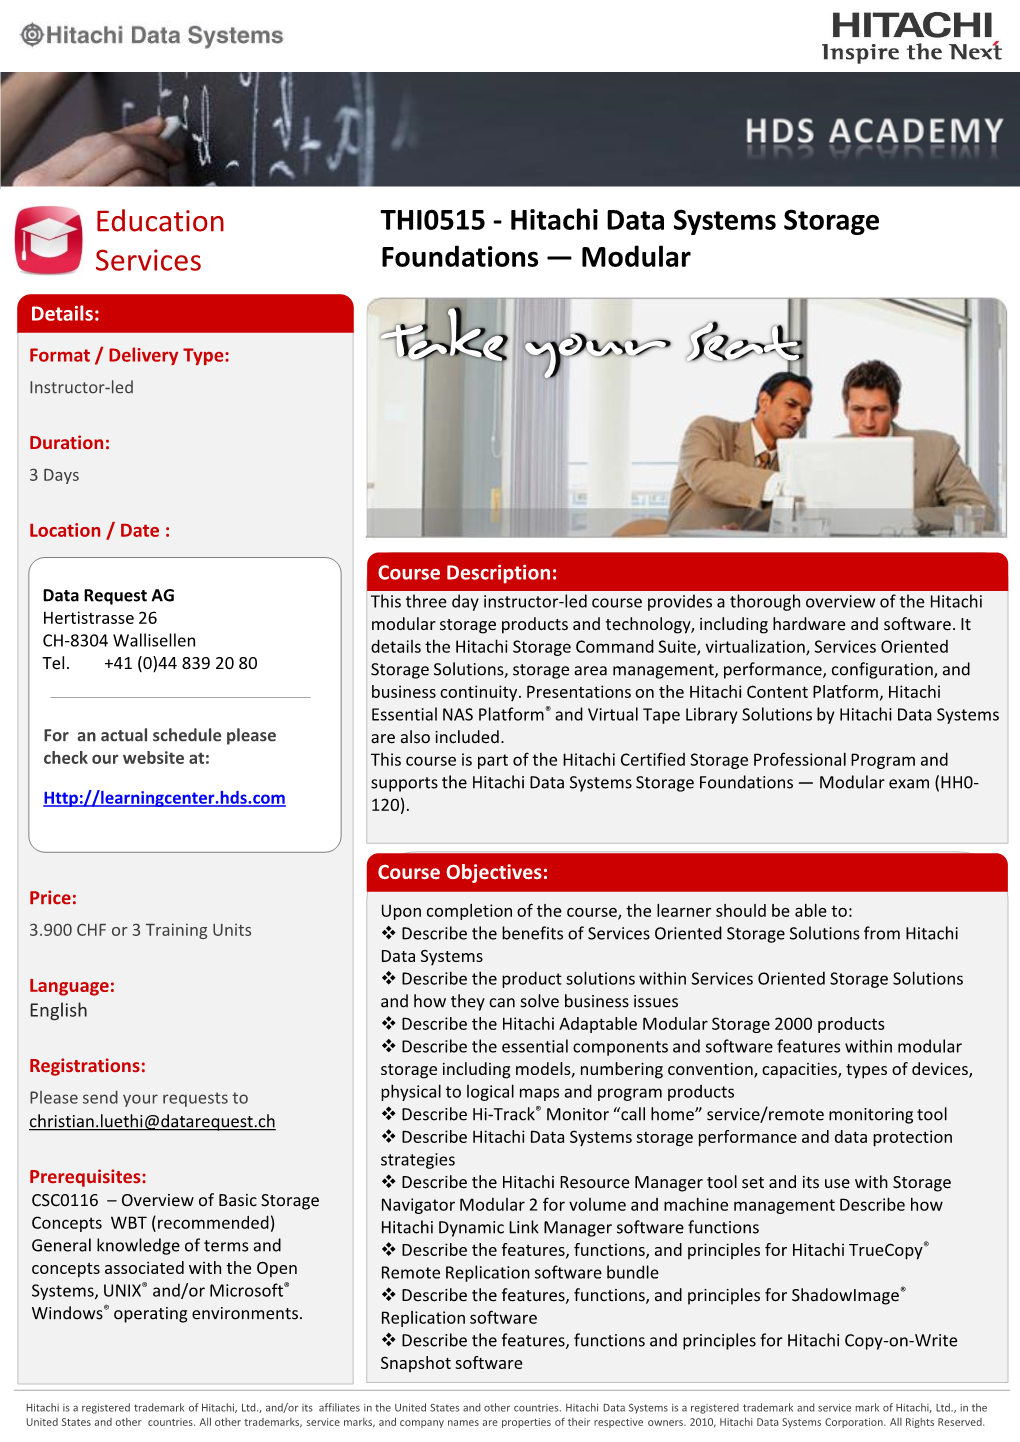 Hitachi Data Systems Storage Foundations — Modular Exam (HH0- 120)